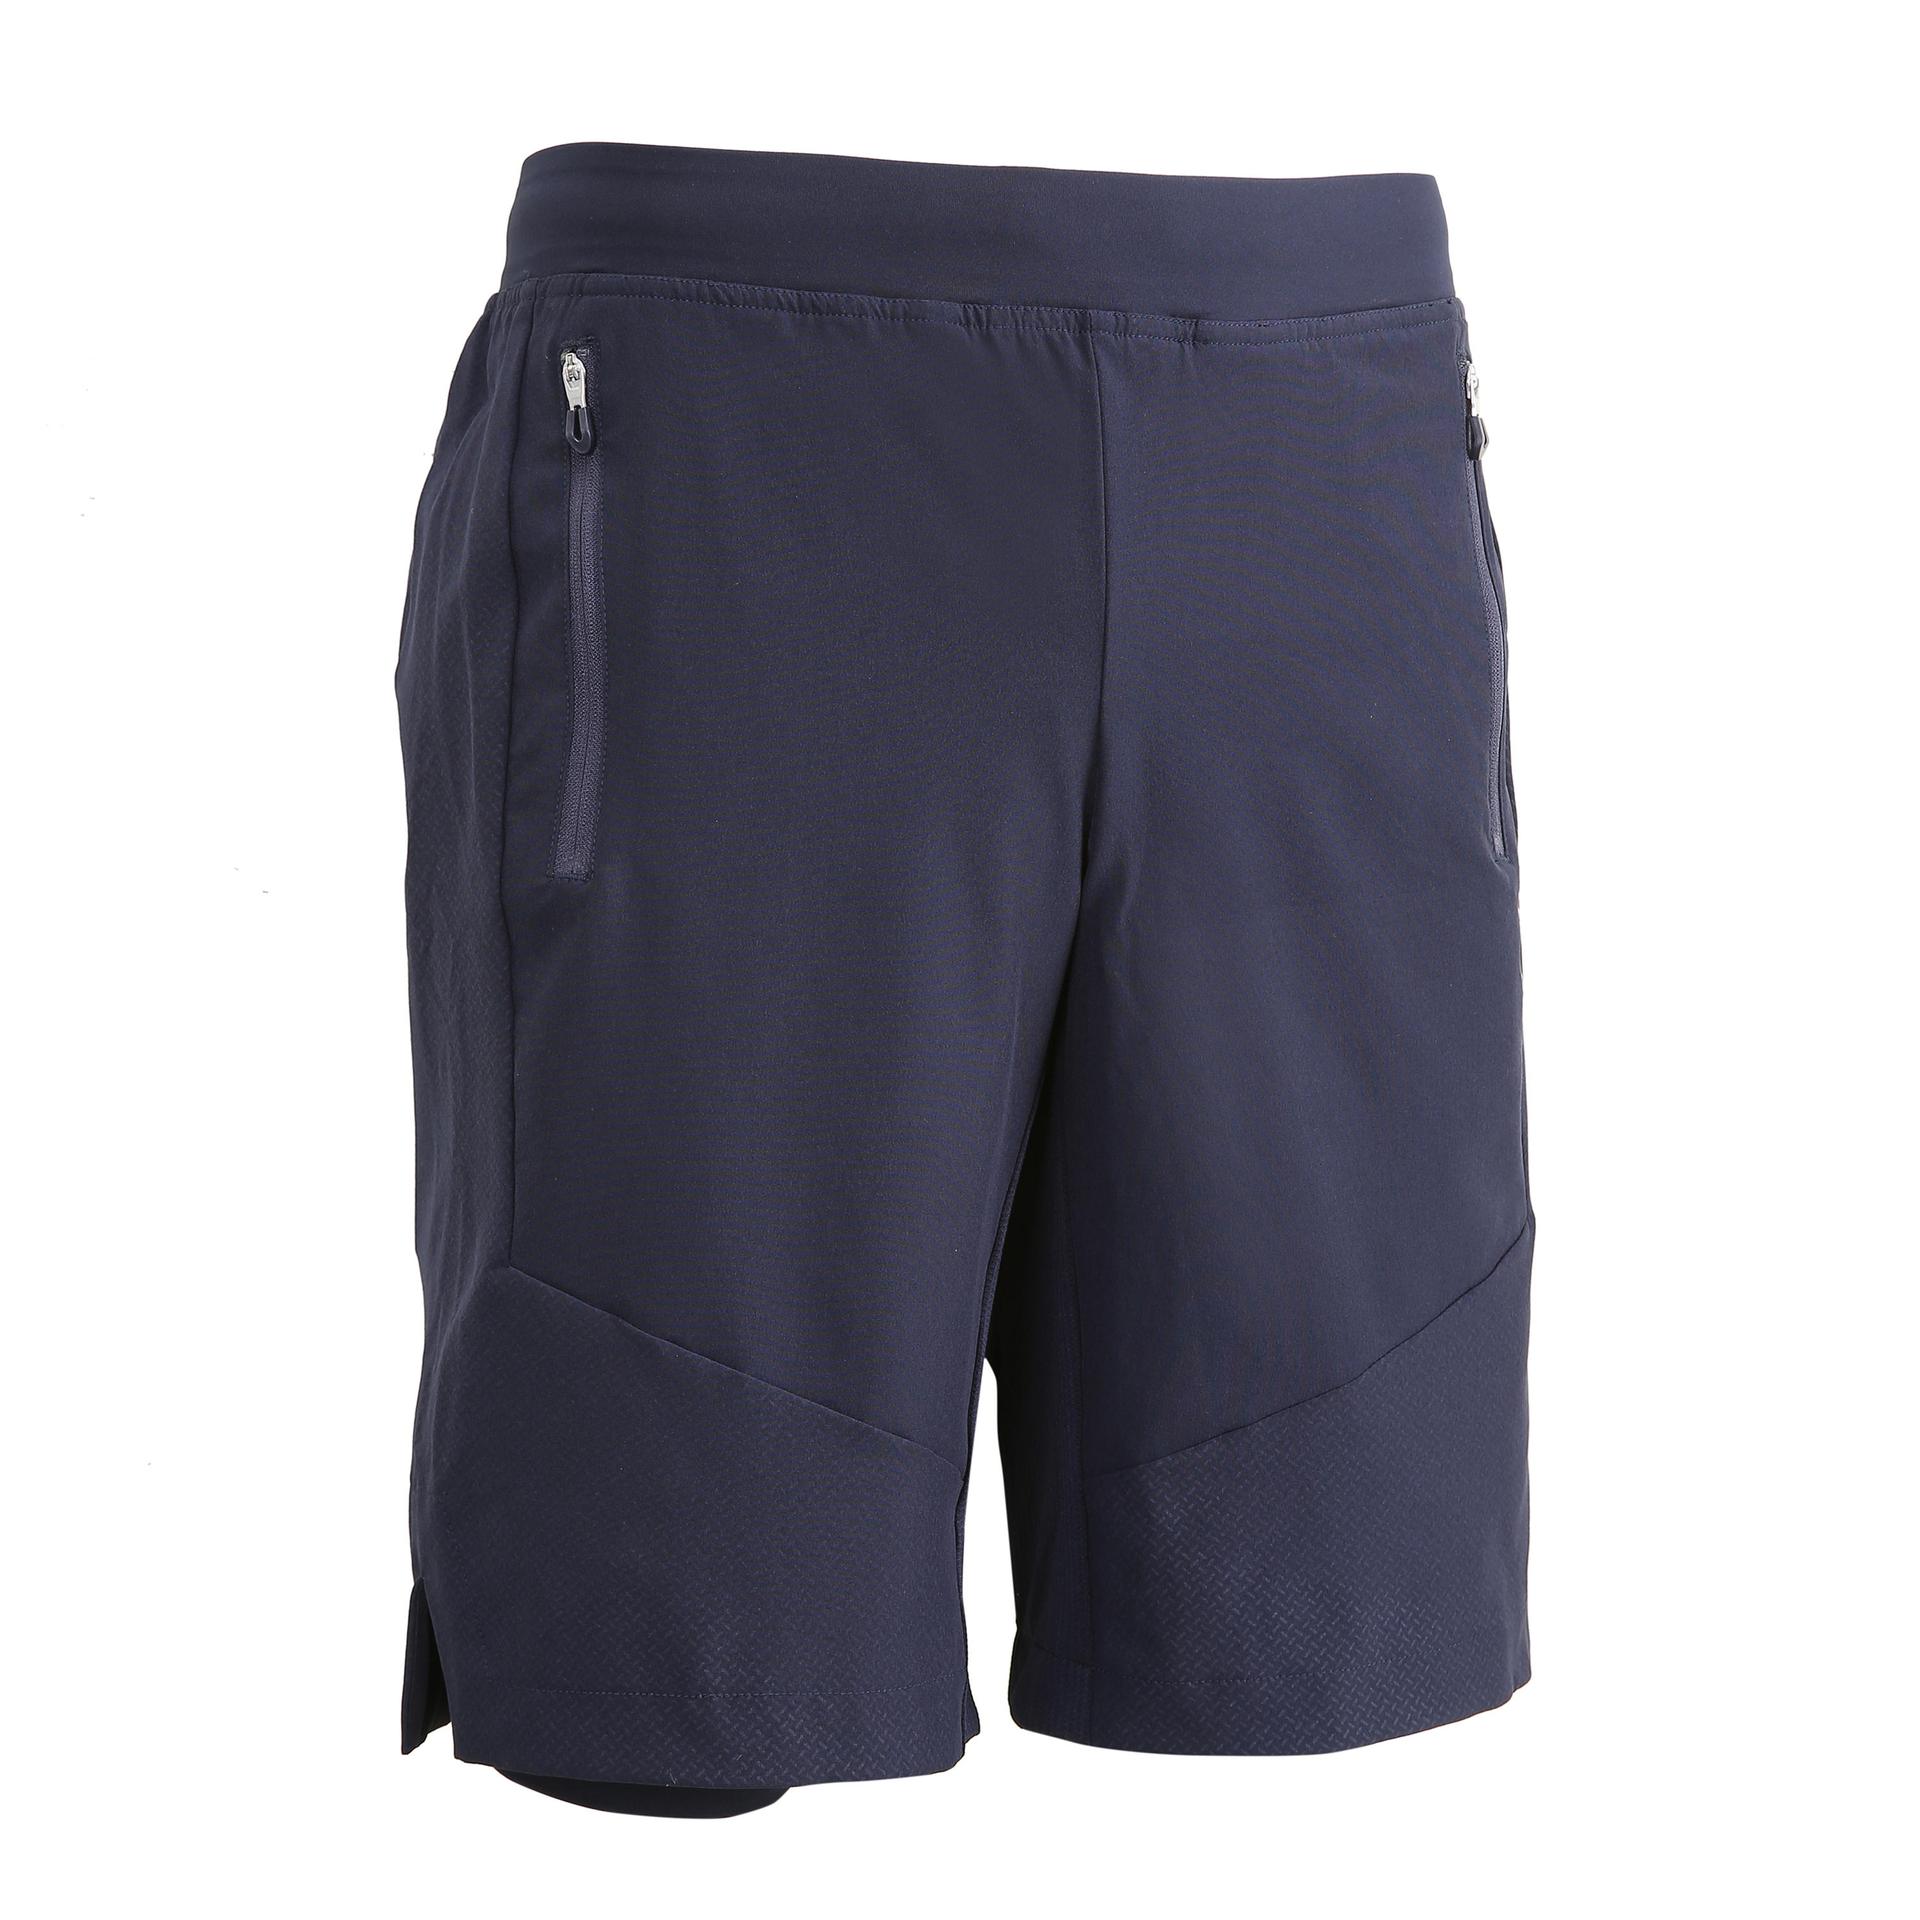 men's 2-in1 fitness shorts - navy blue